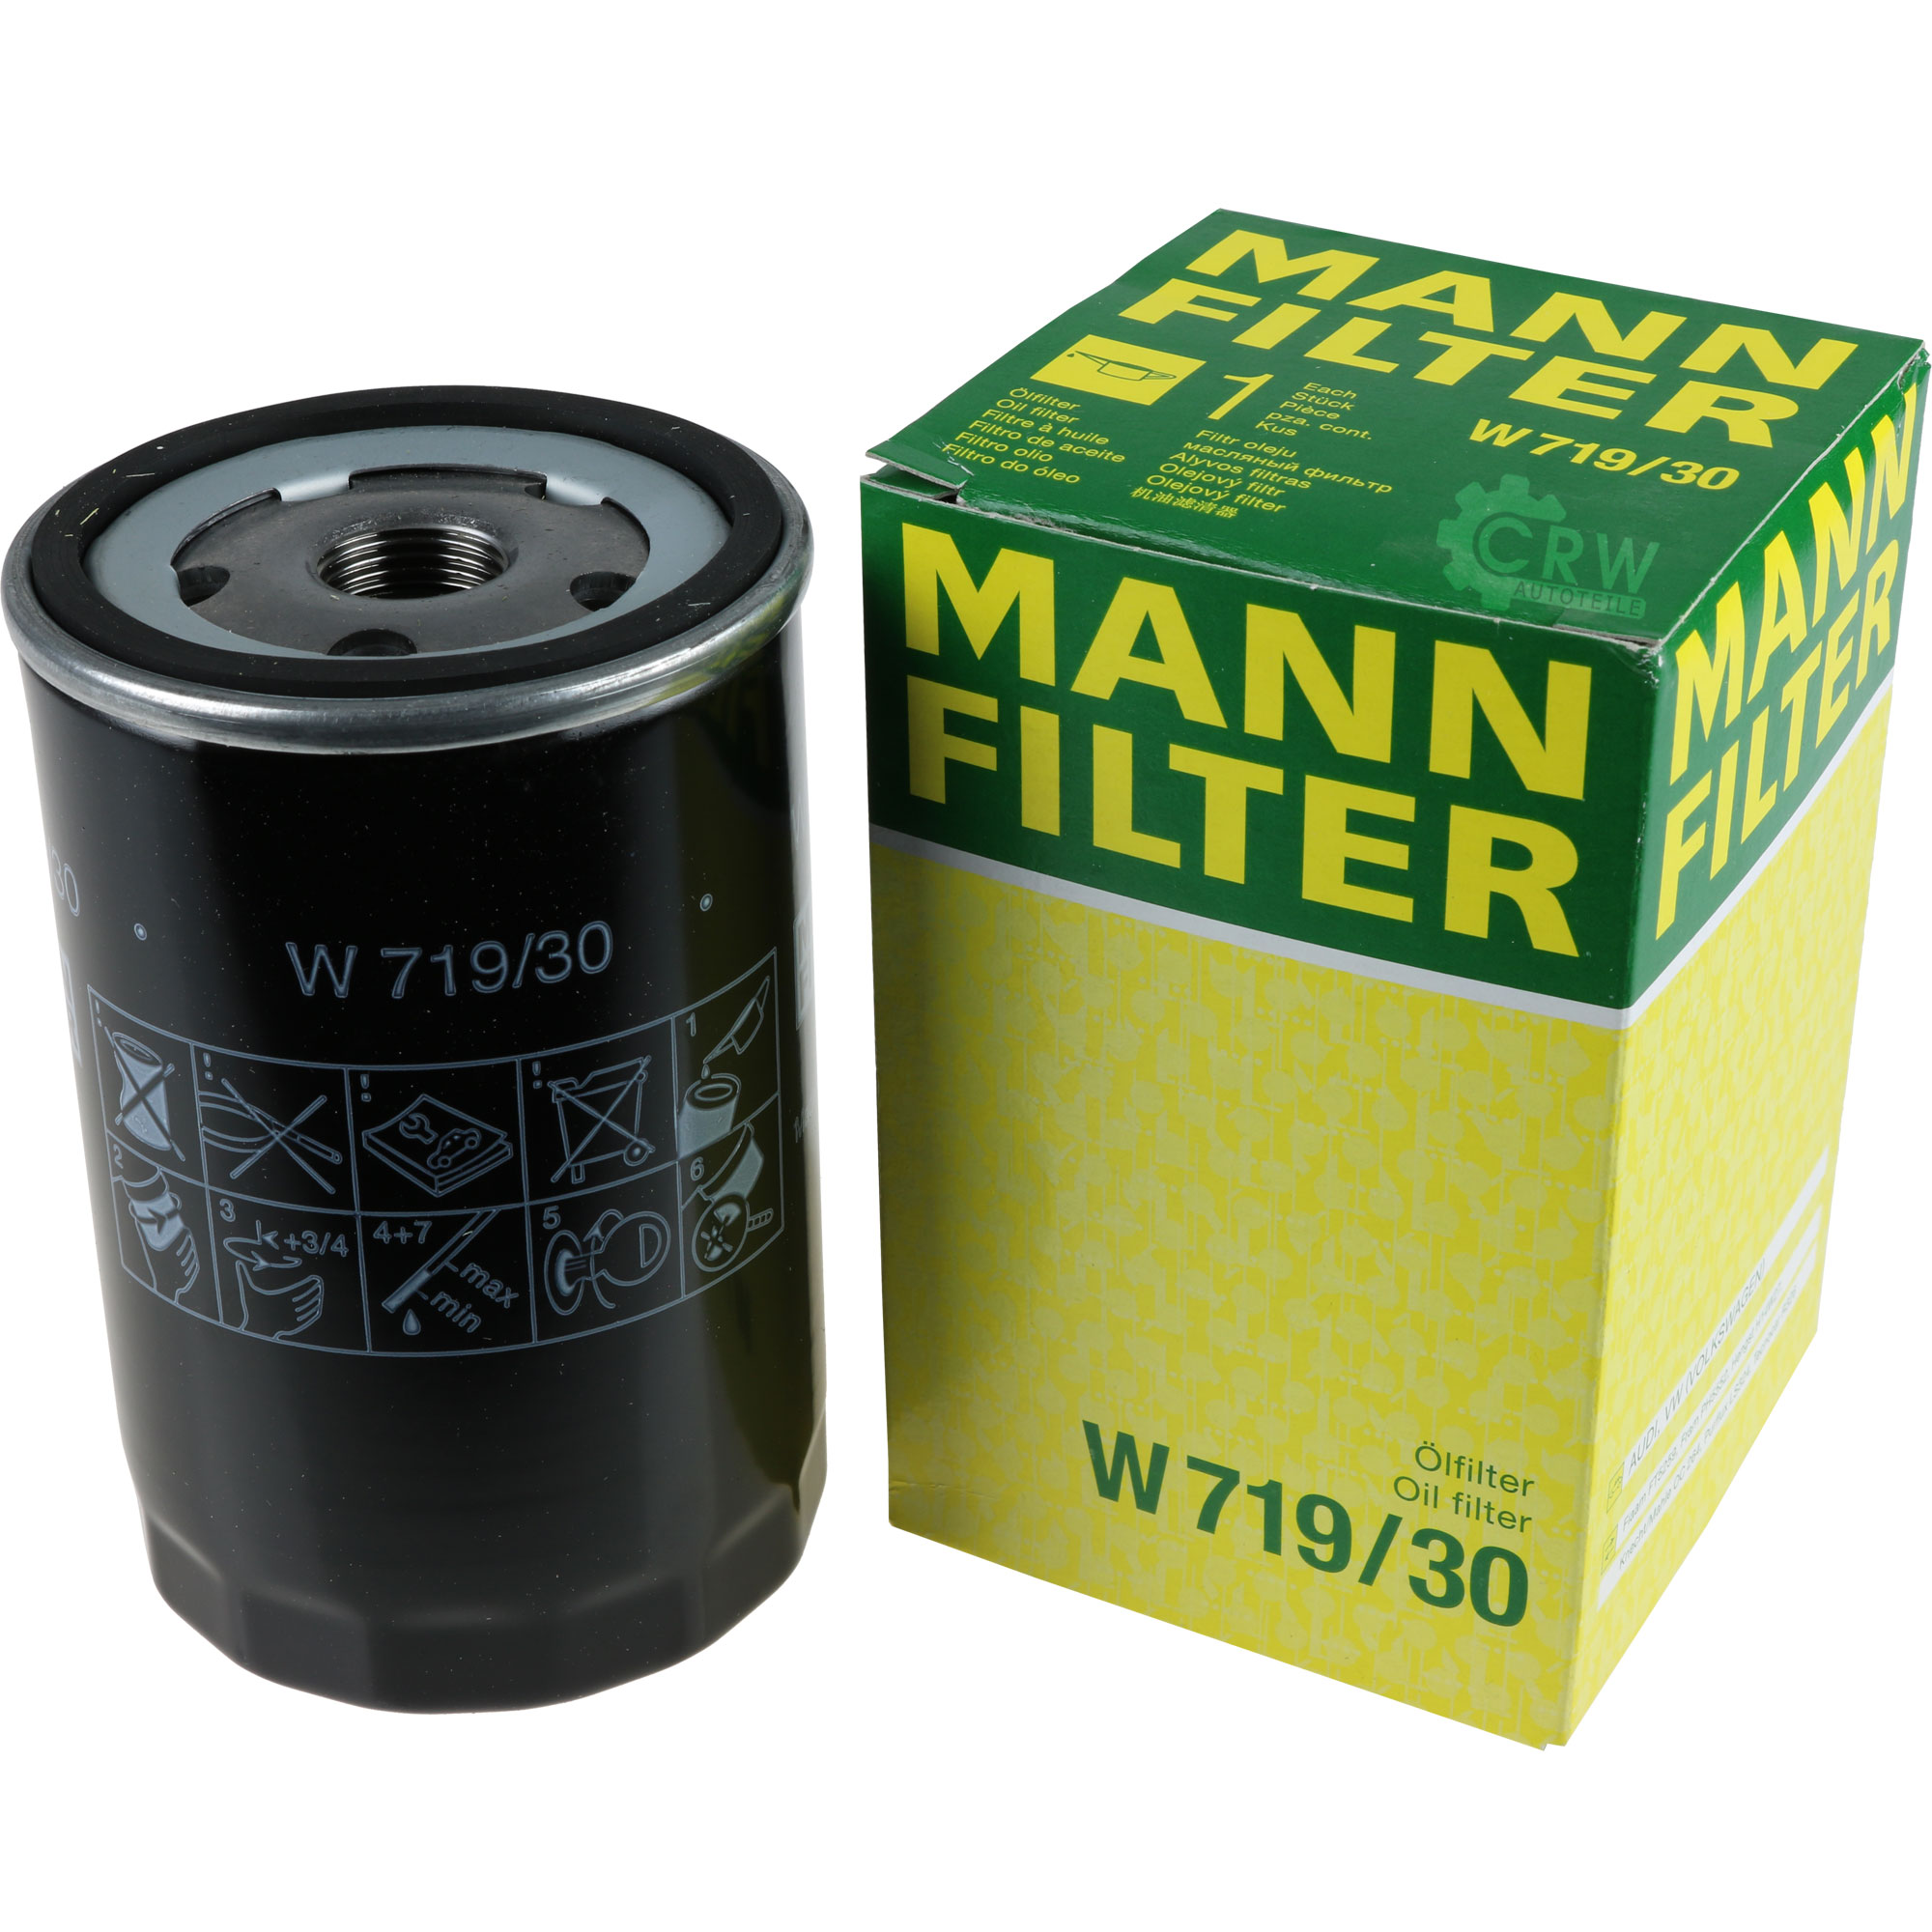 MANN-FILTER Ölfilter Oelfilter W 719/30 (10) Oil Filter